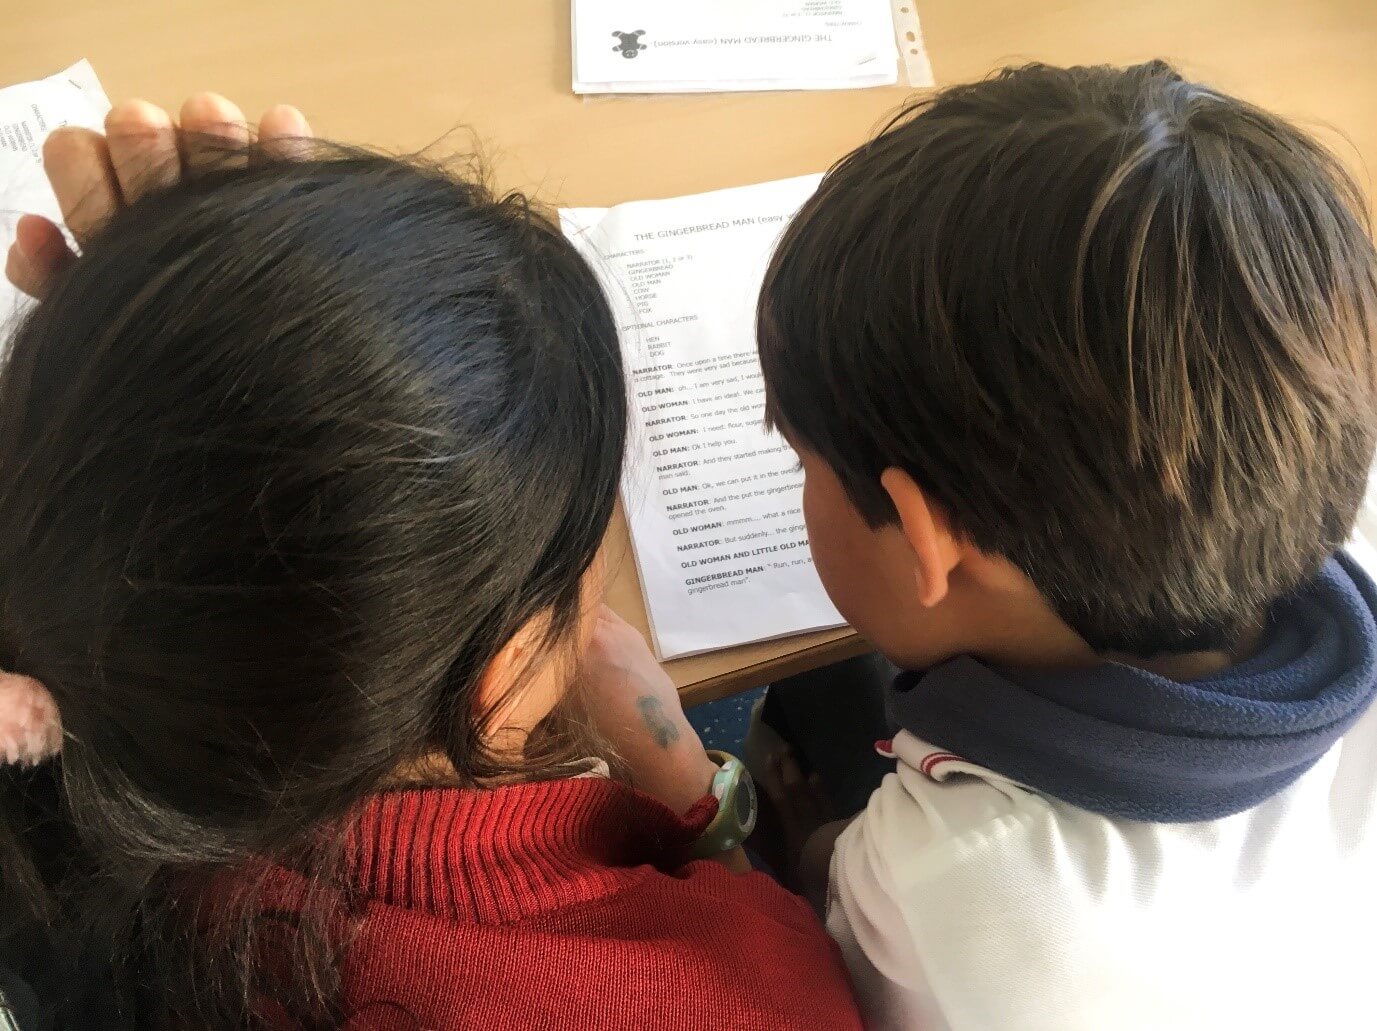 Two children reading